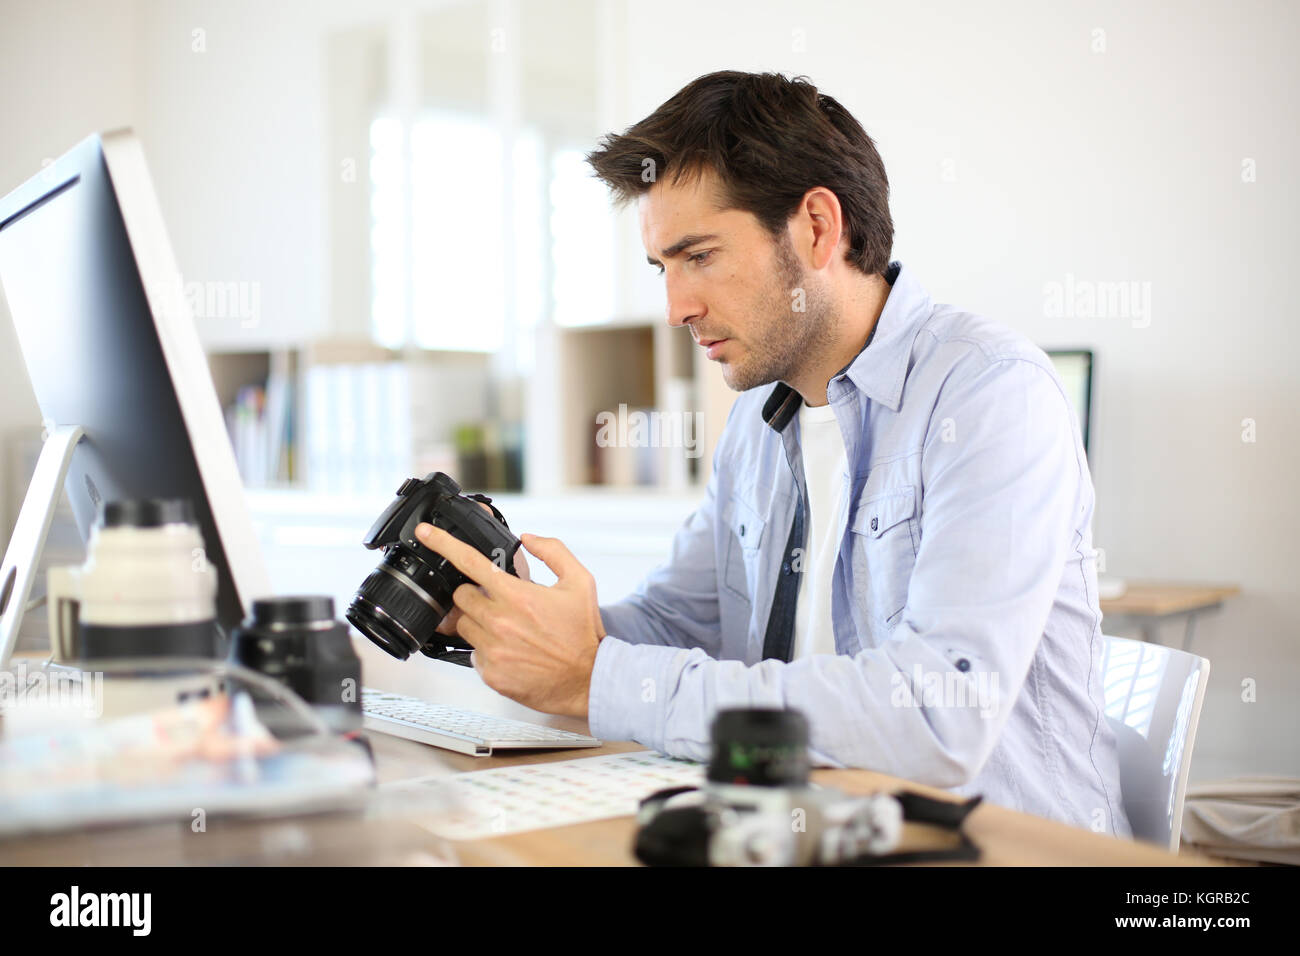 Photographer in office working on desktop computer Stock Photo